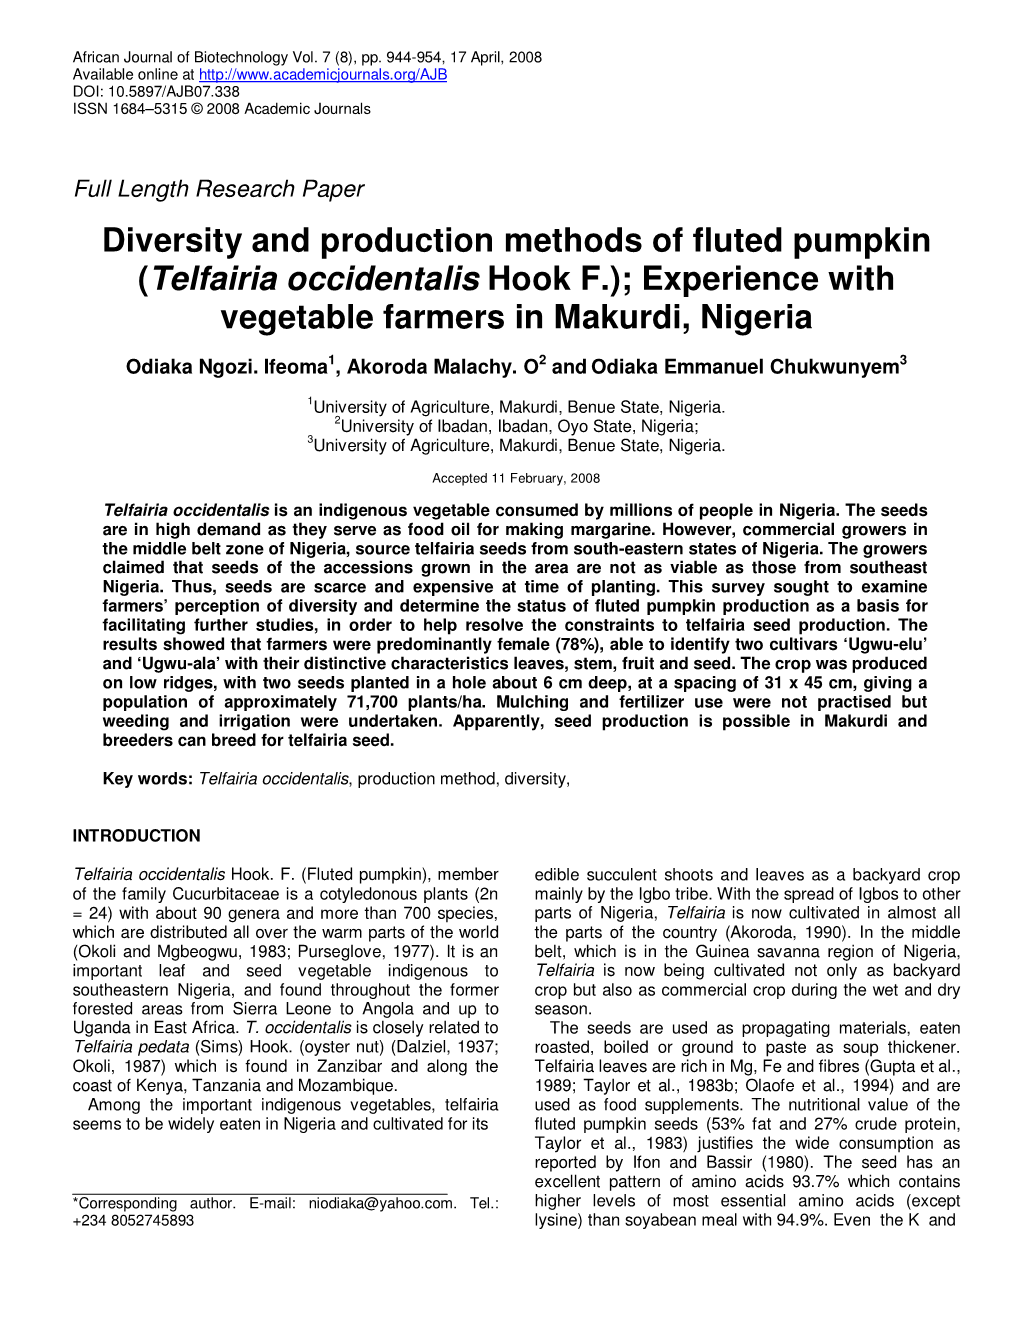 (Telfairia Occidentalis Hook F.); Experience with Vegetable Farmers in Makurdi, Nigeria